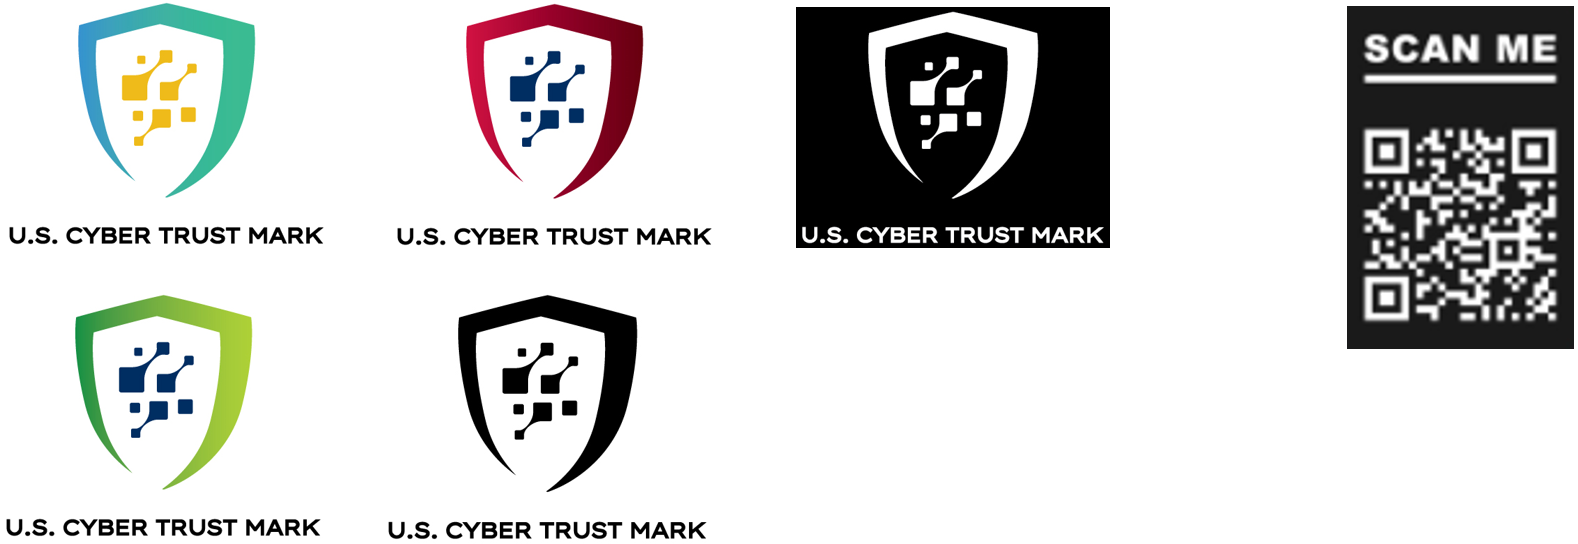 US Cyber Trust Mark 